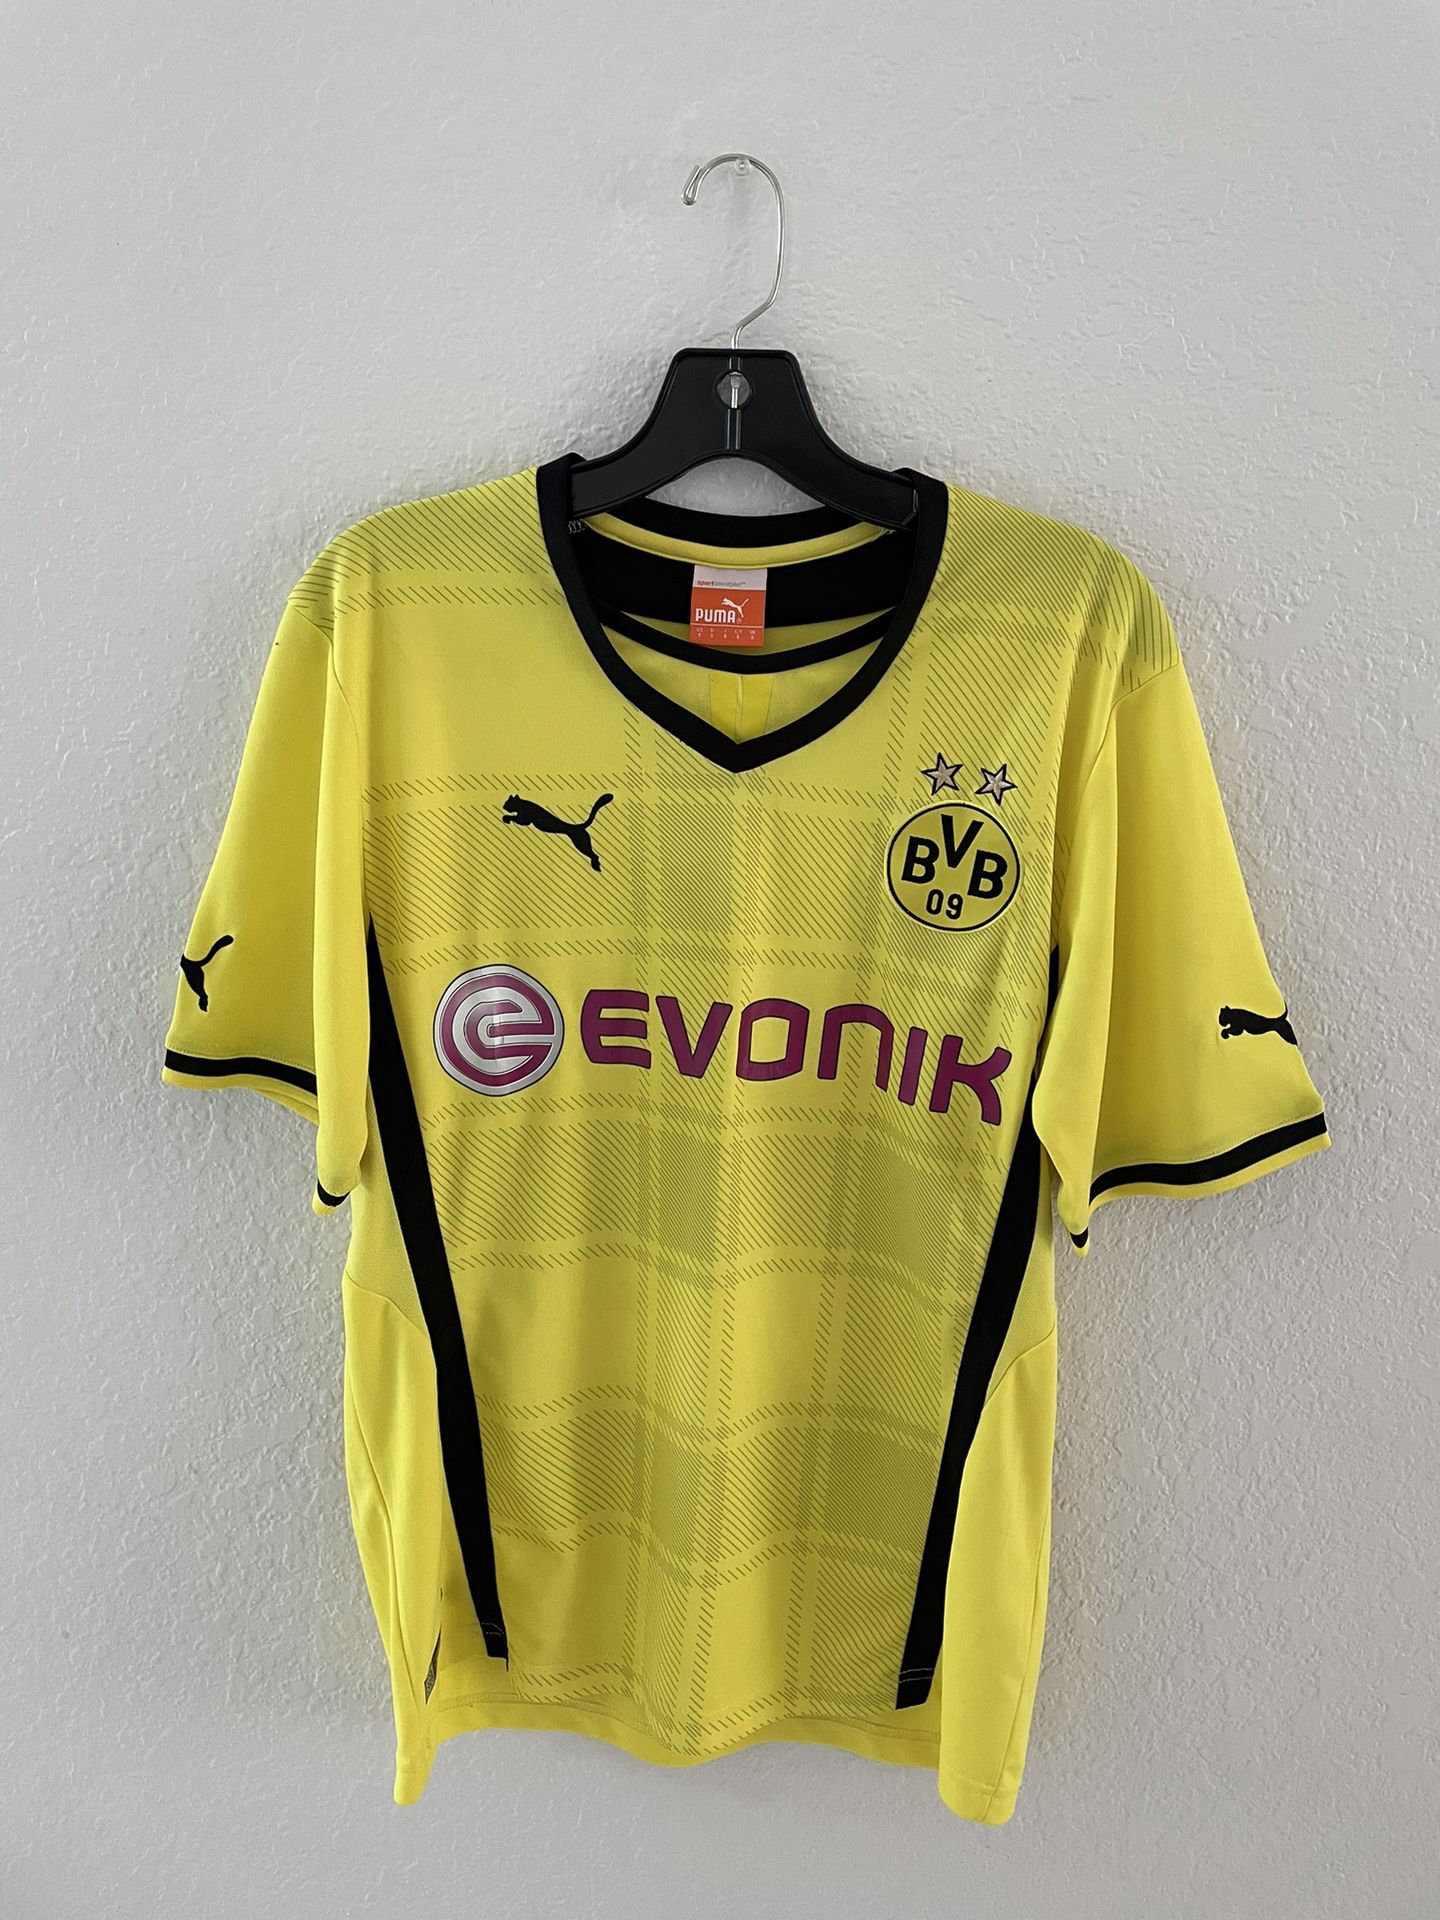 Puma Borussia Dortmund jersey REUS #11 Jersey Men’s Size S